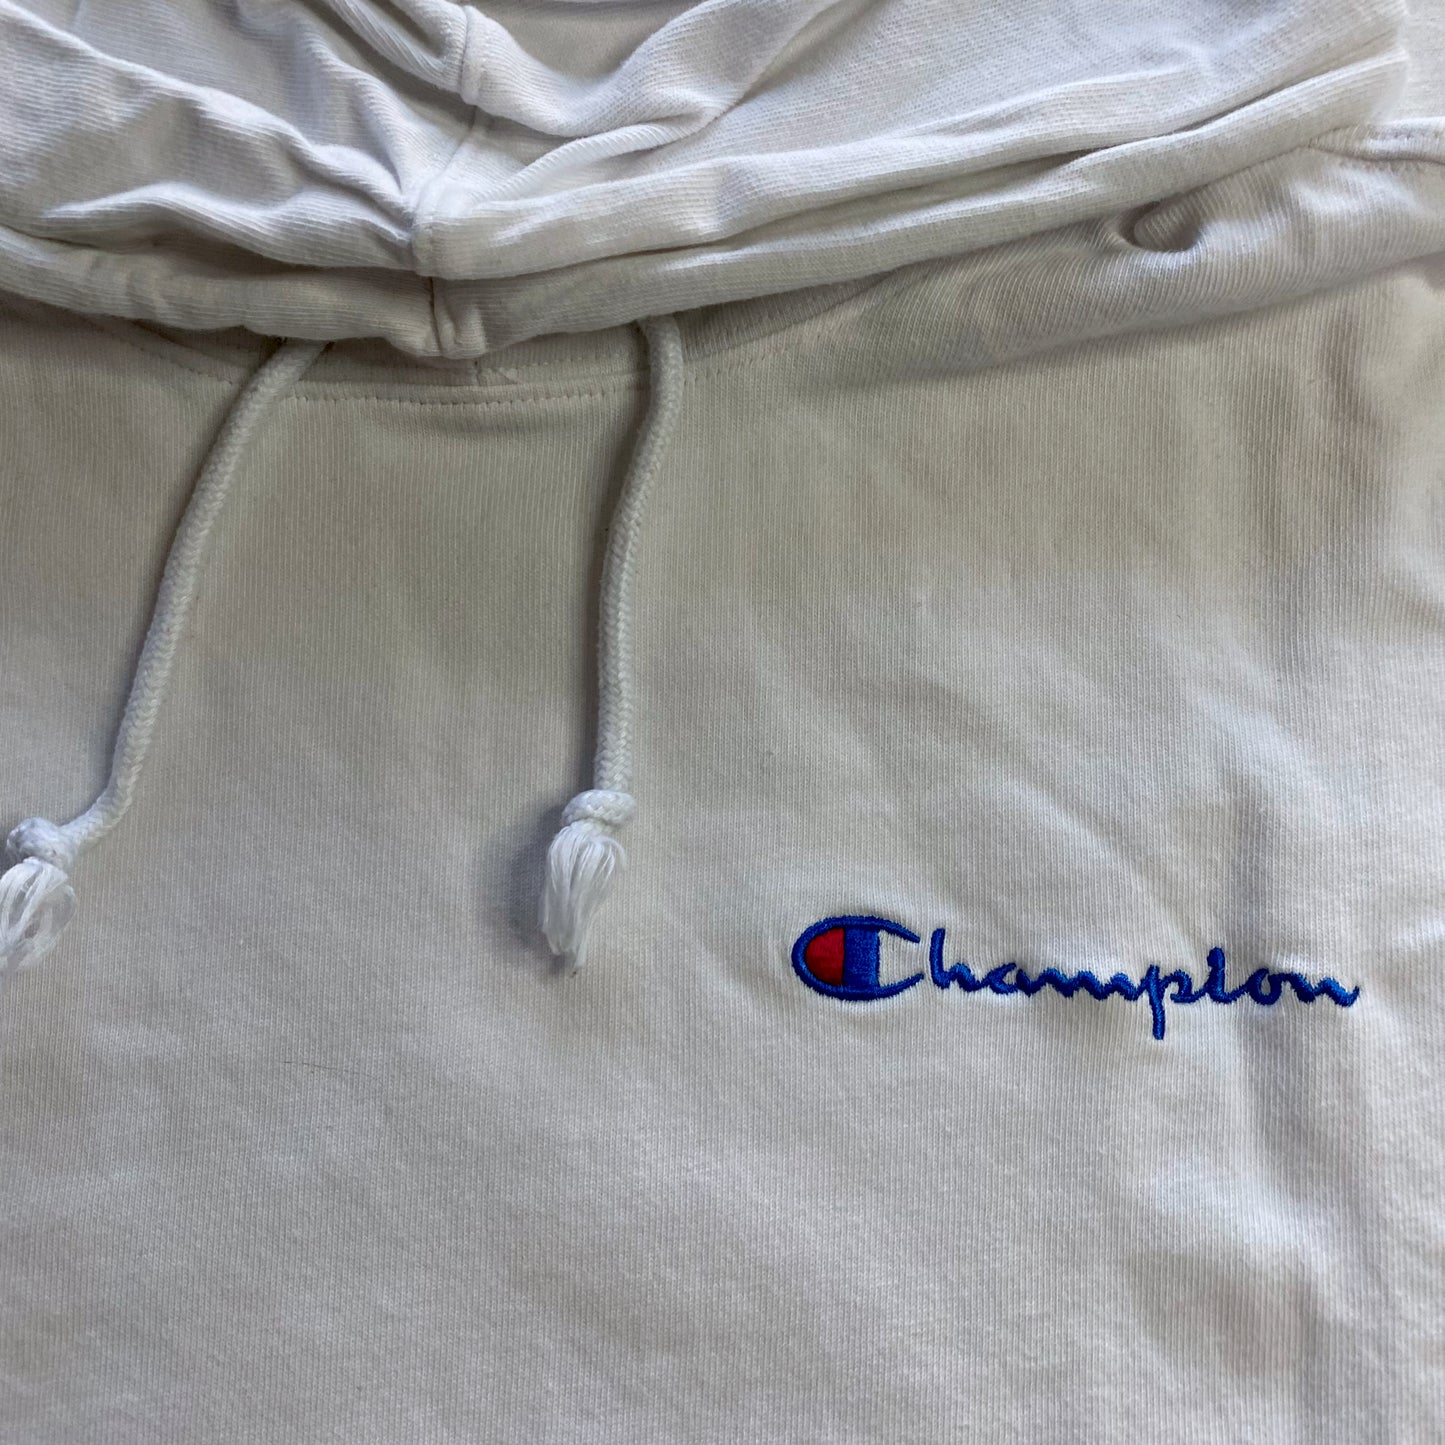 white hoodie Champion/ Size S